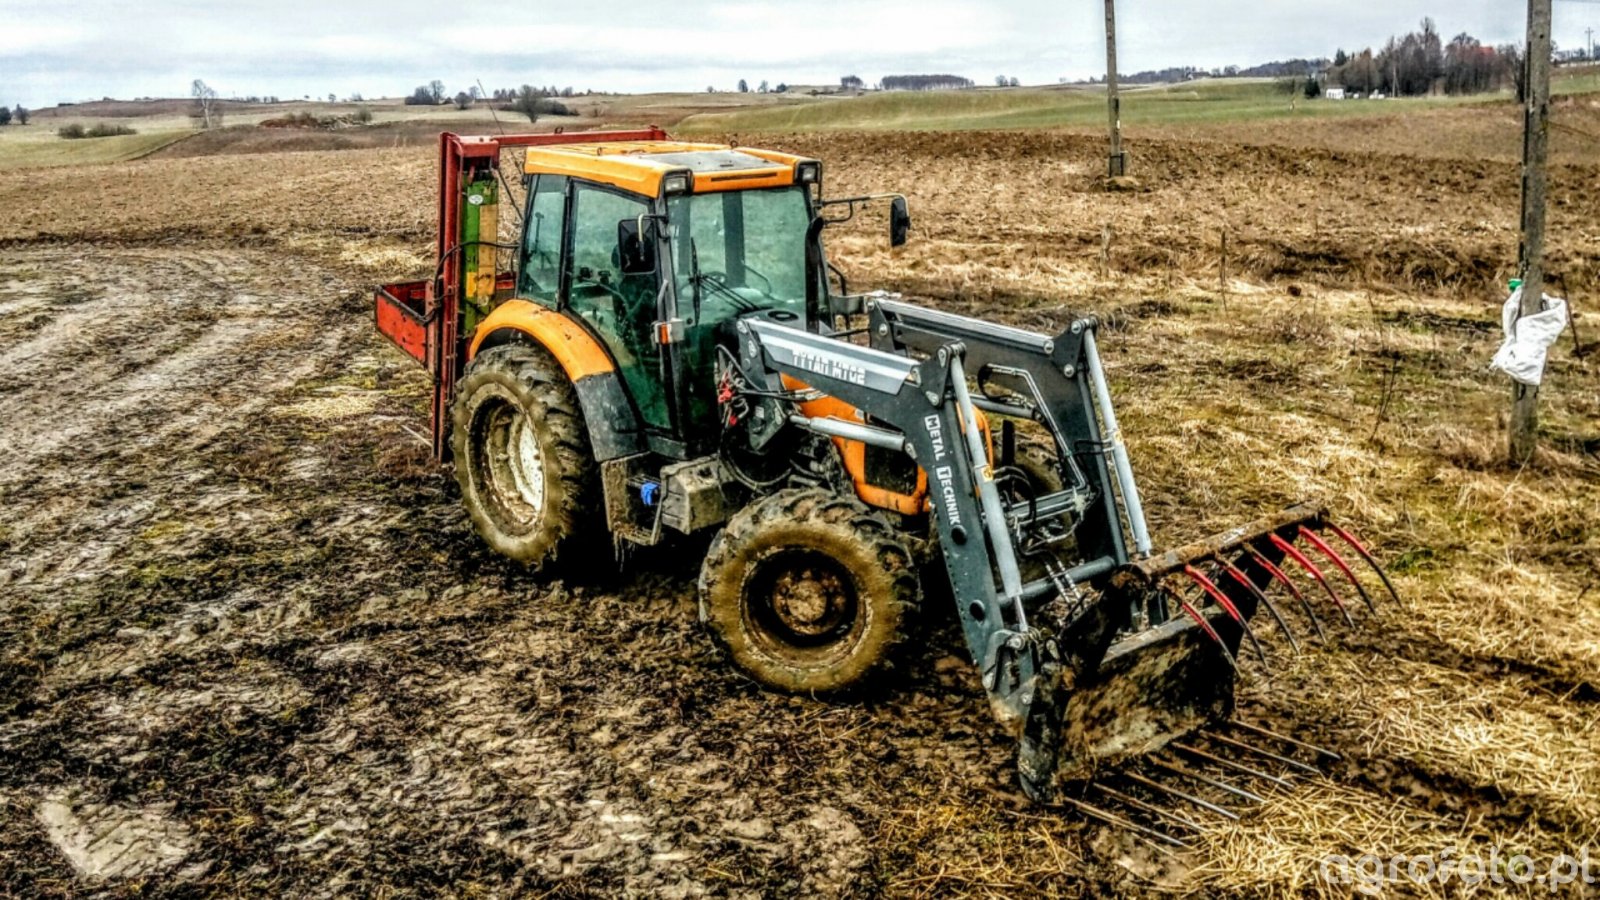 Foto traktor Renault Cergos id748651 Galeria rolnicza